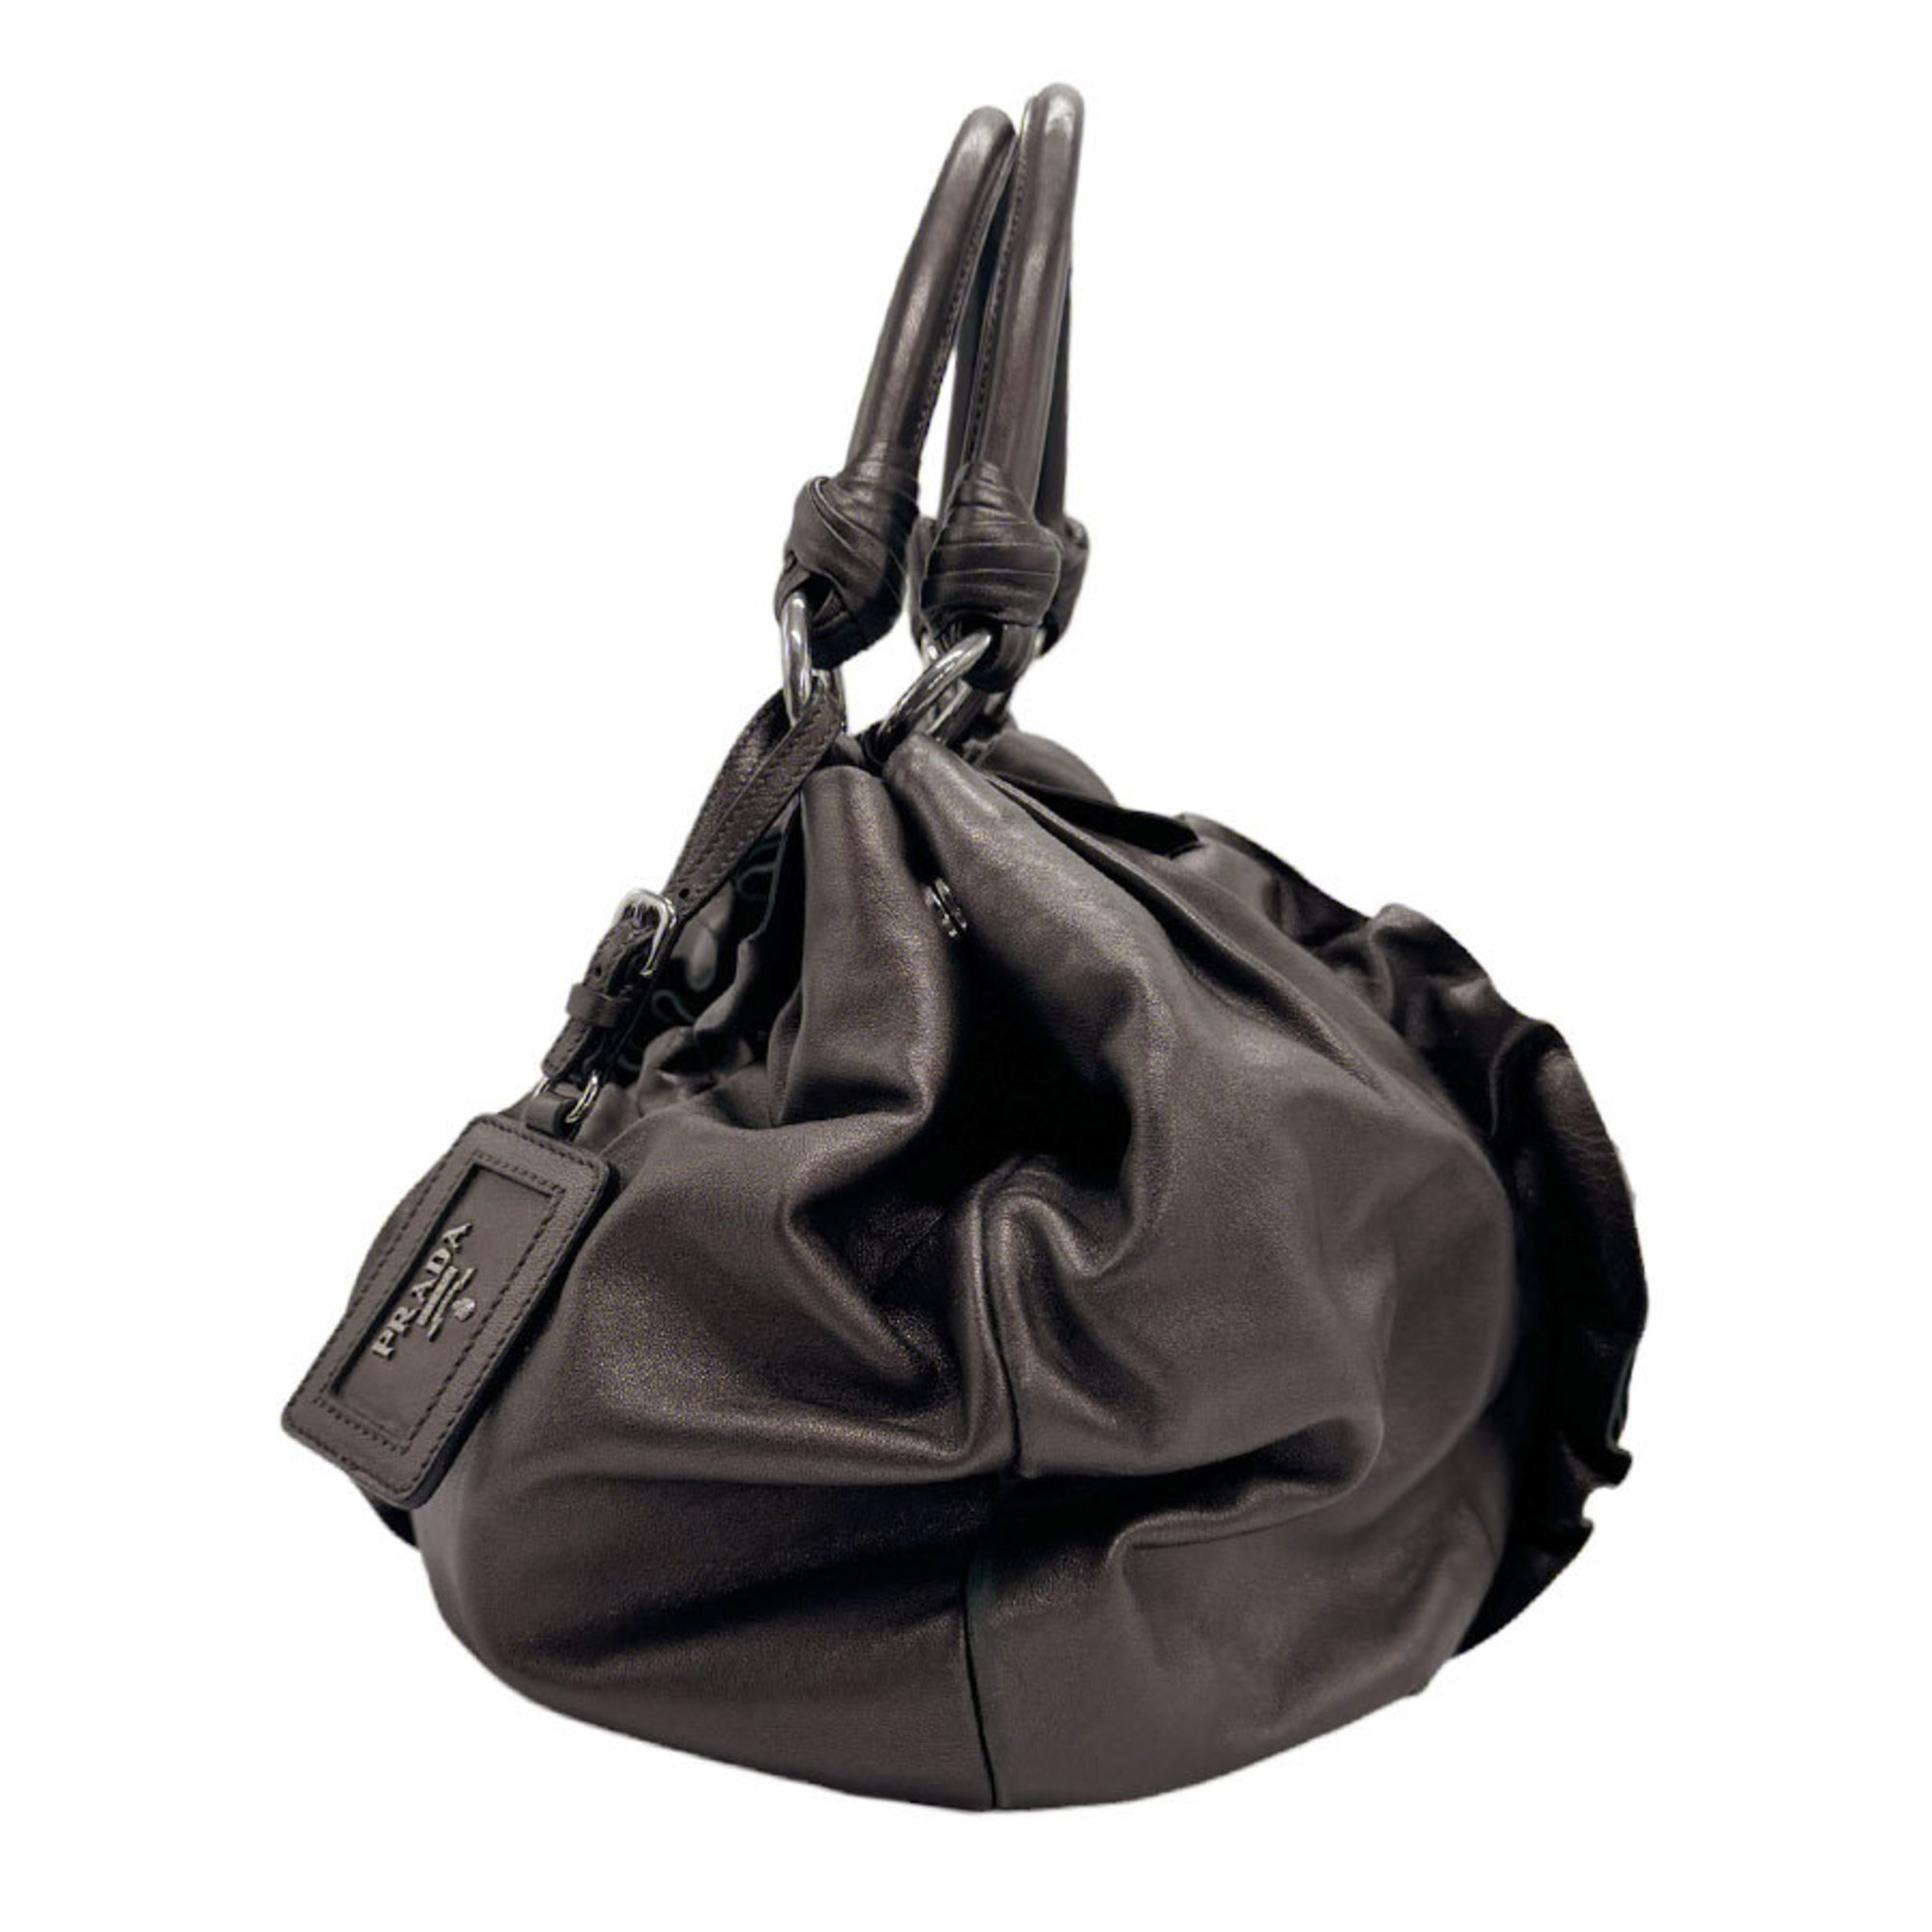 PRADA handbag leather metallic brown ladies BR2987 z0972